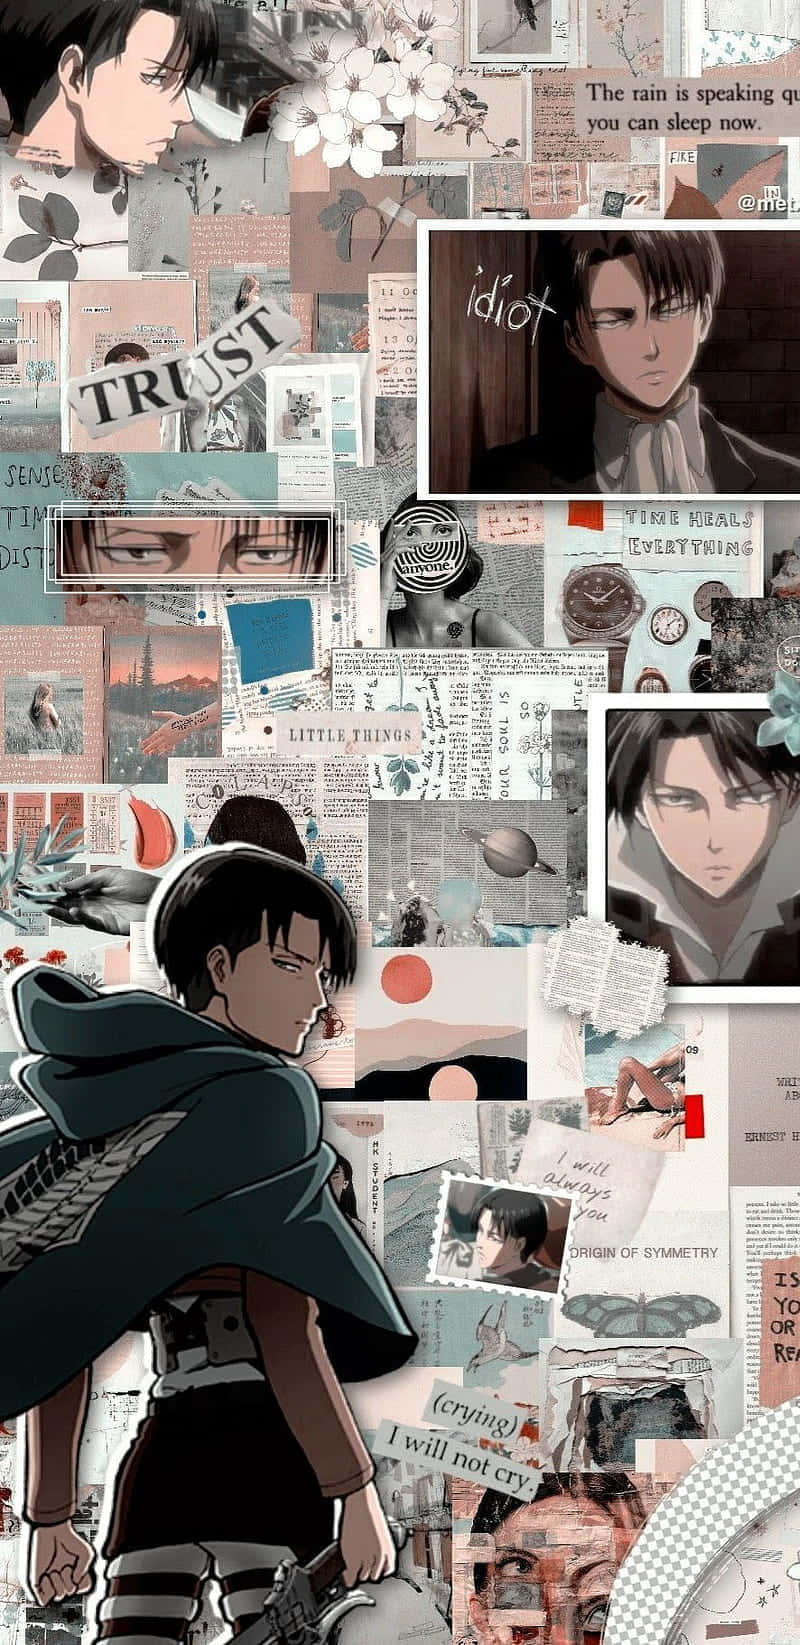 Attackon Titan Collage Aesthetic Wallpaper